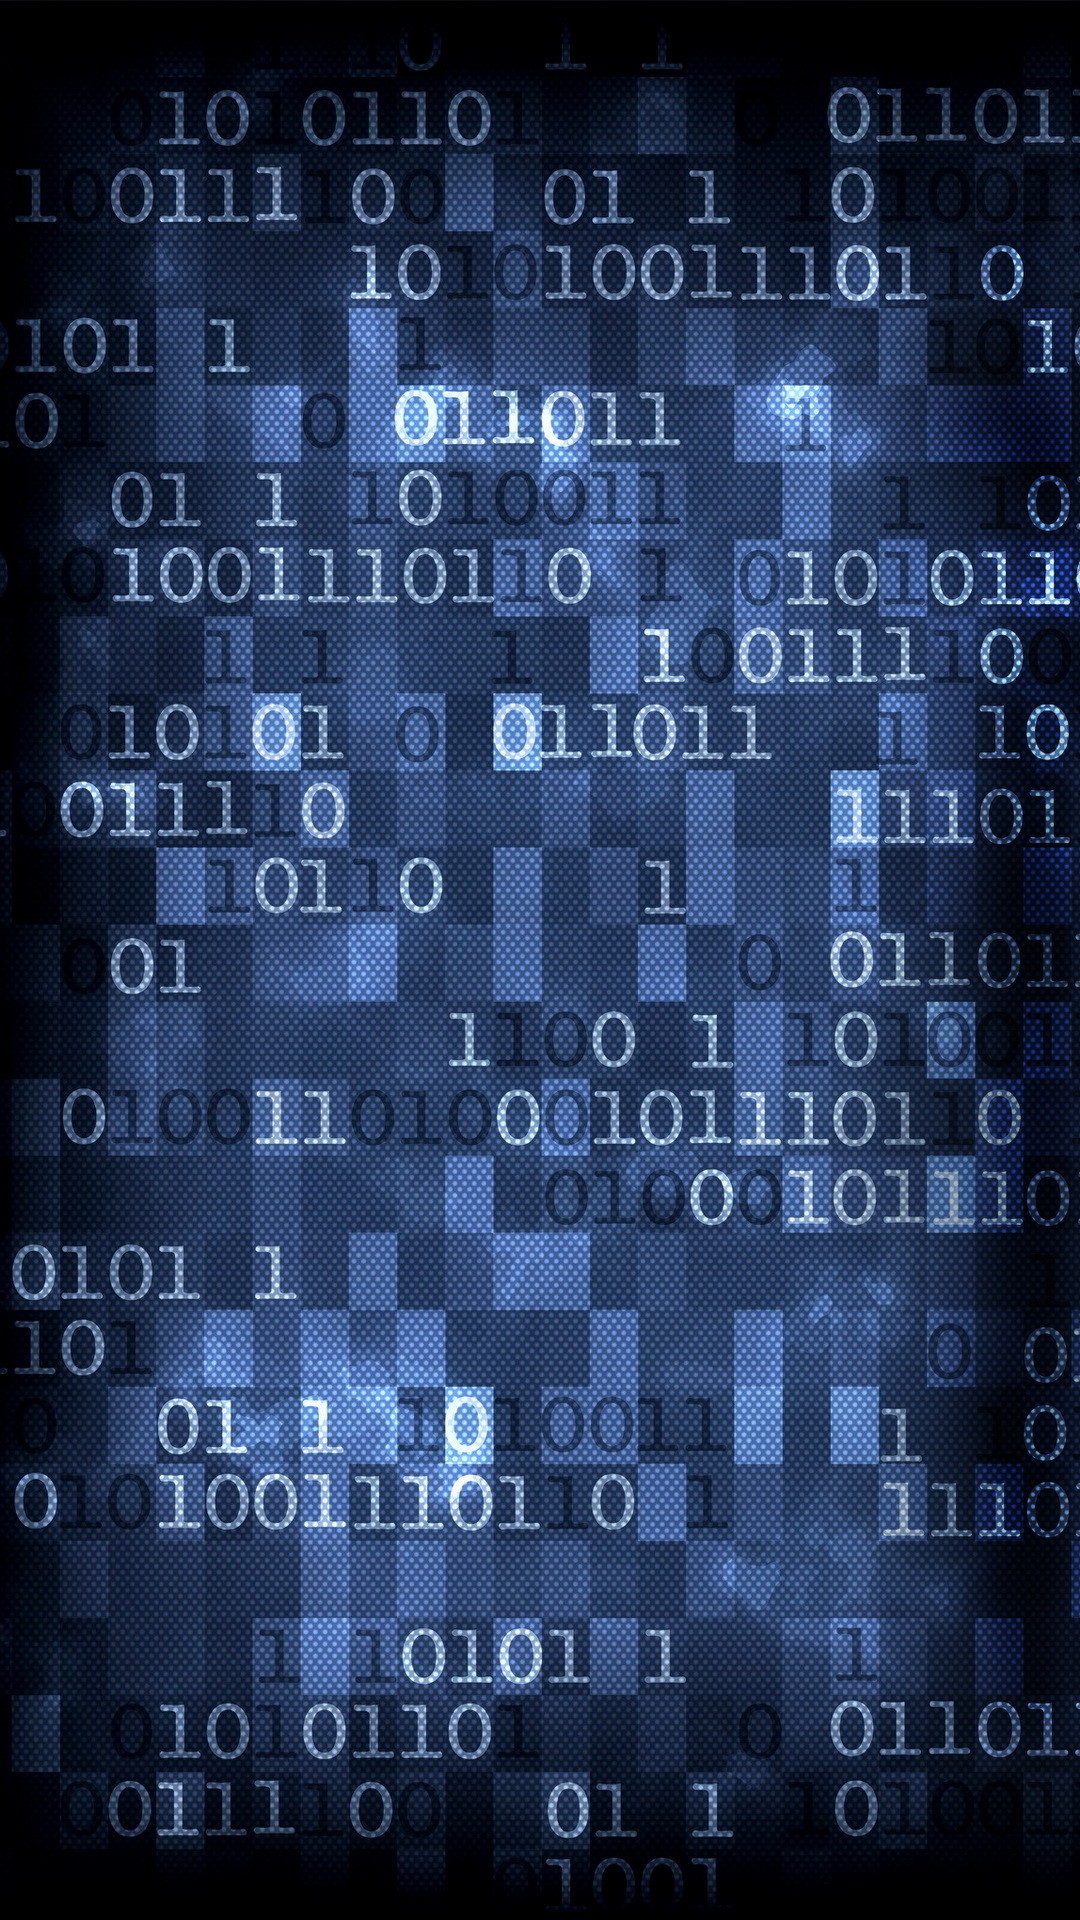 Mobile binary code net